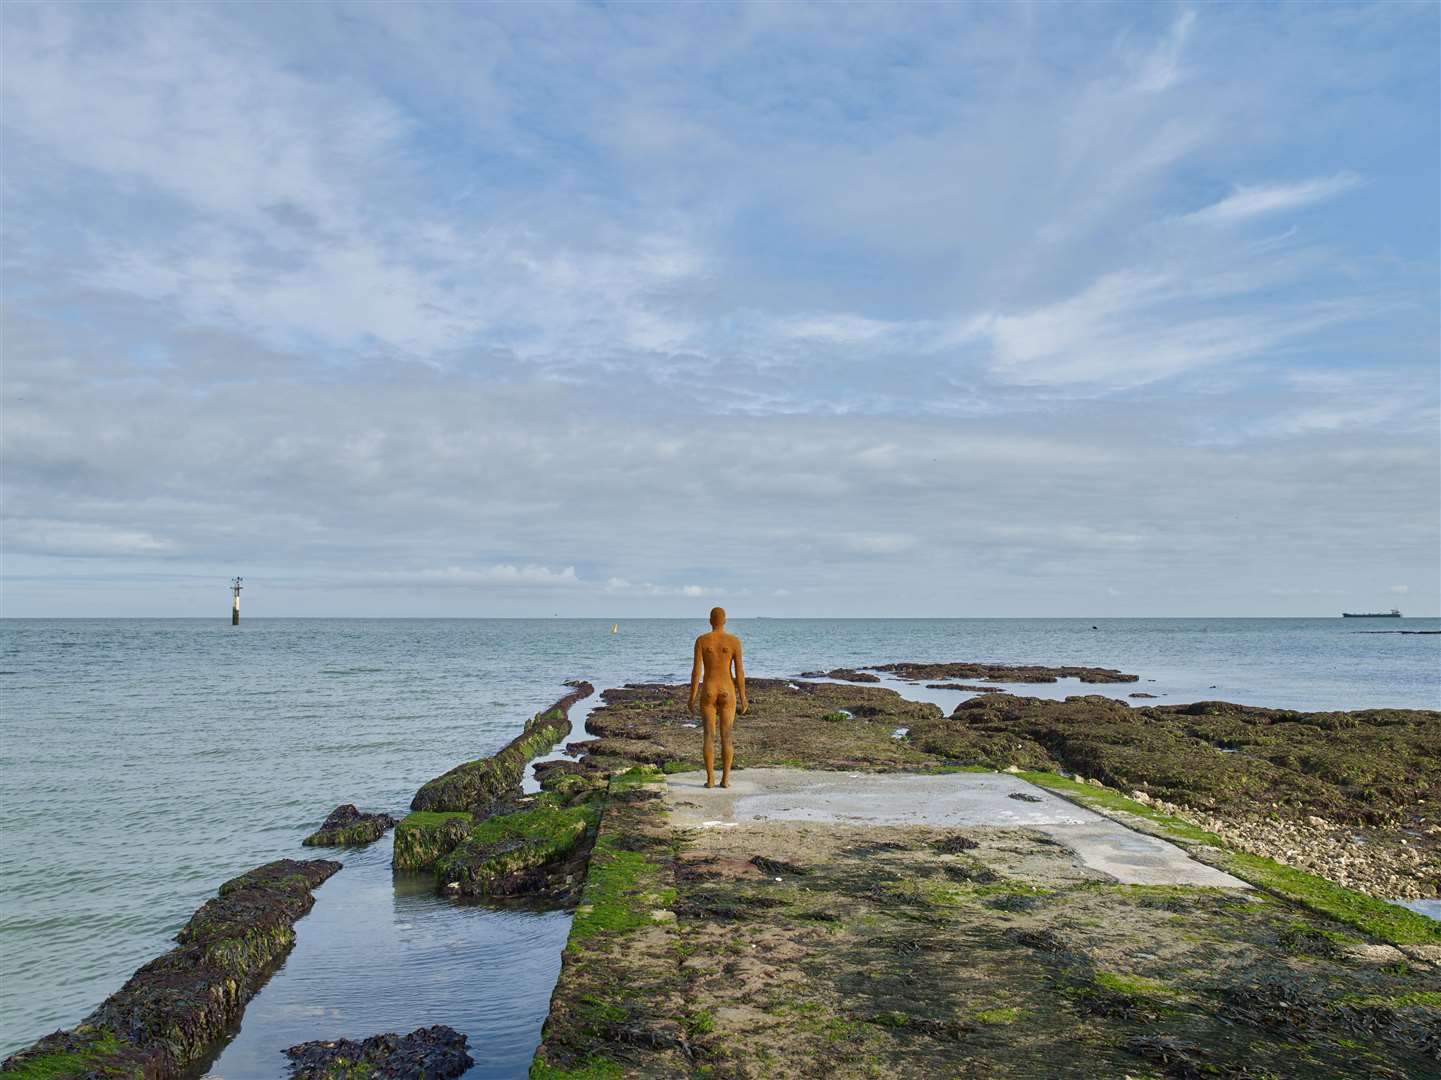 Antony Gormley's sculpture faces out to sea